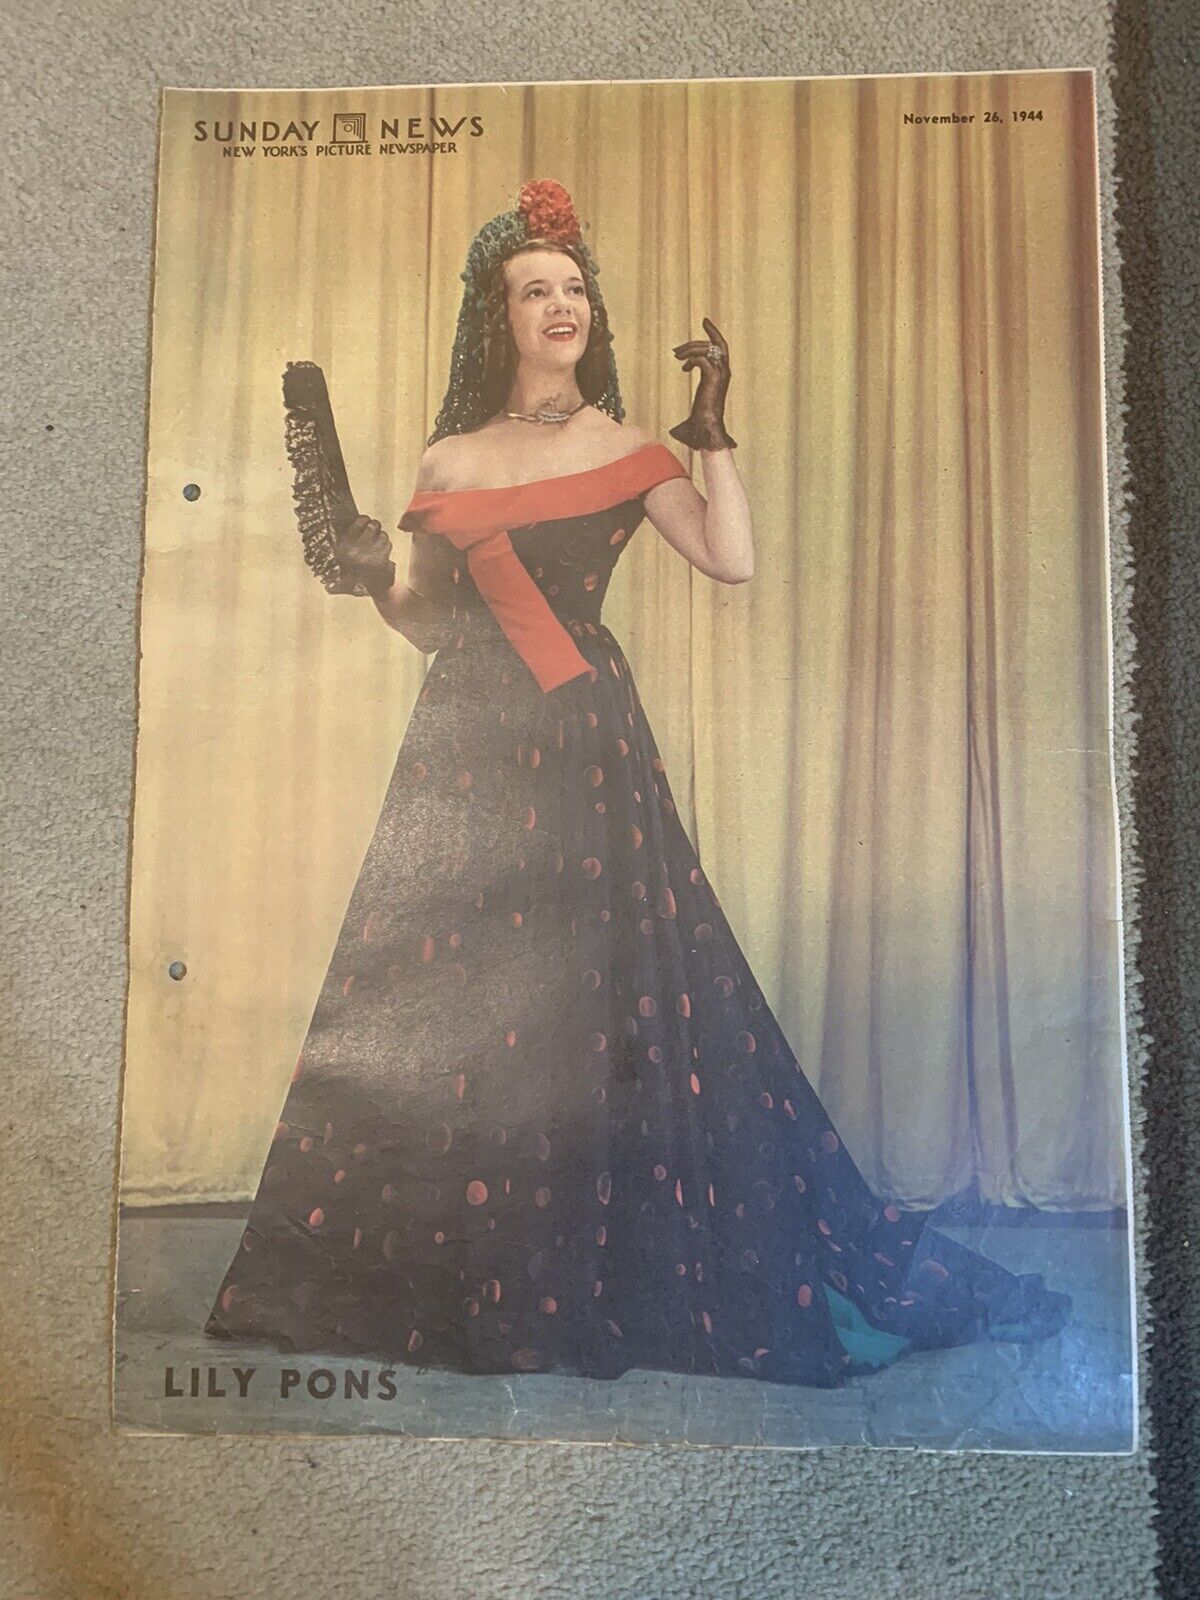 LILY PONS original color portrait SUNDAY NEWS 11/26/44 HOLLYWOOD GOLDEN AGE